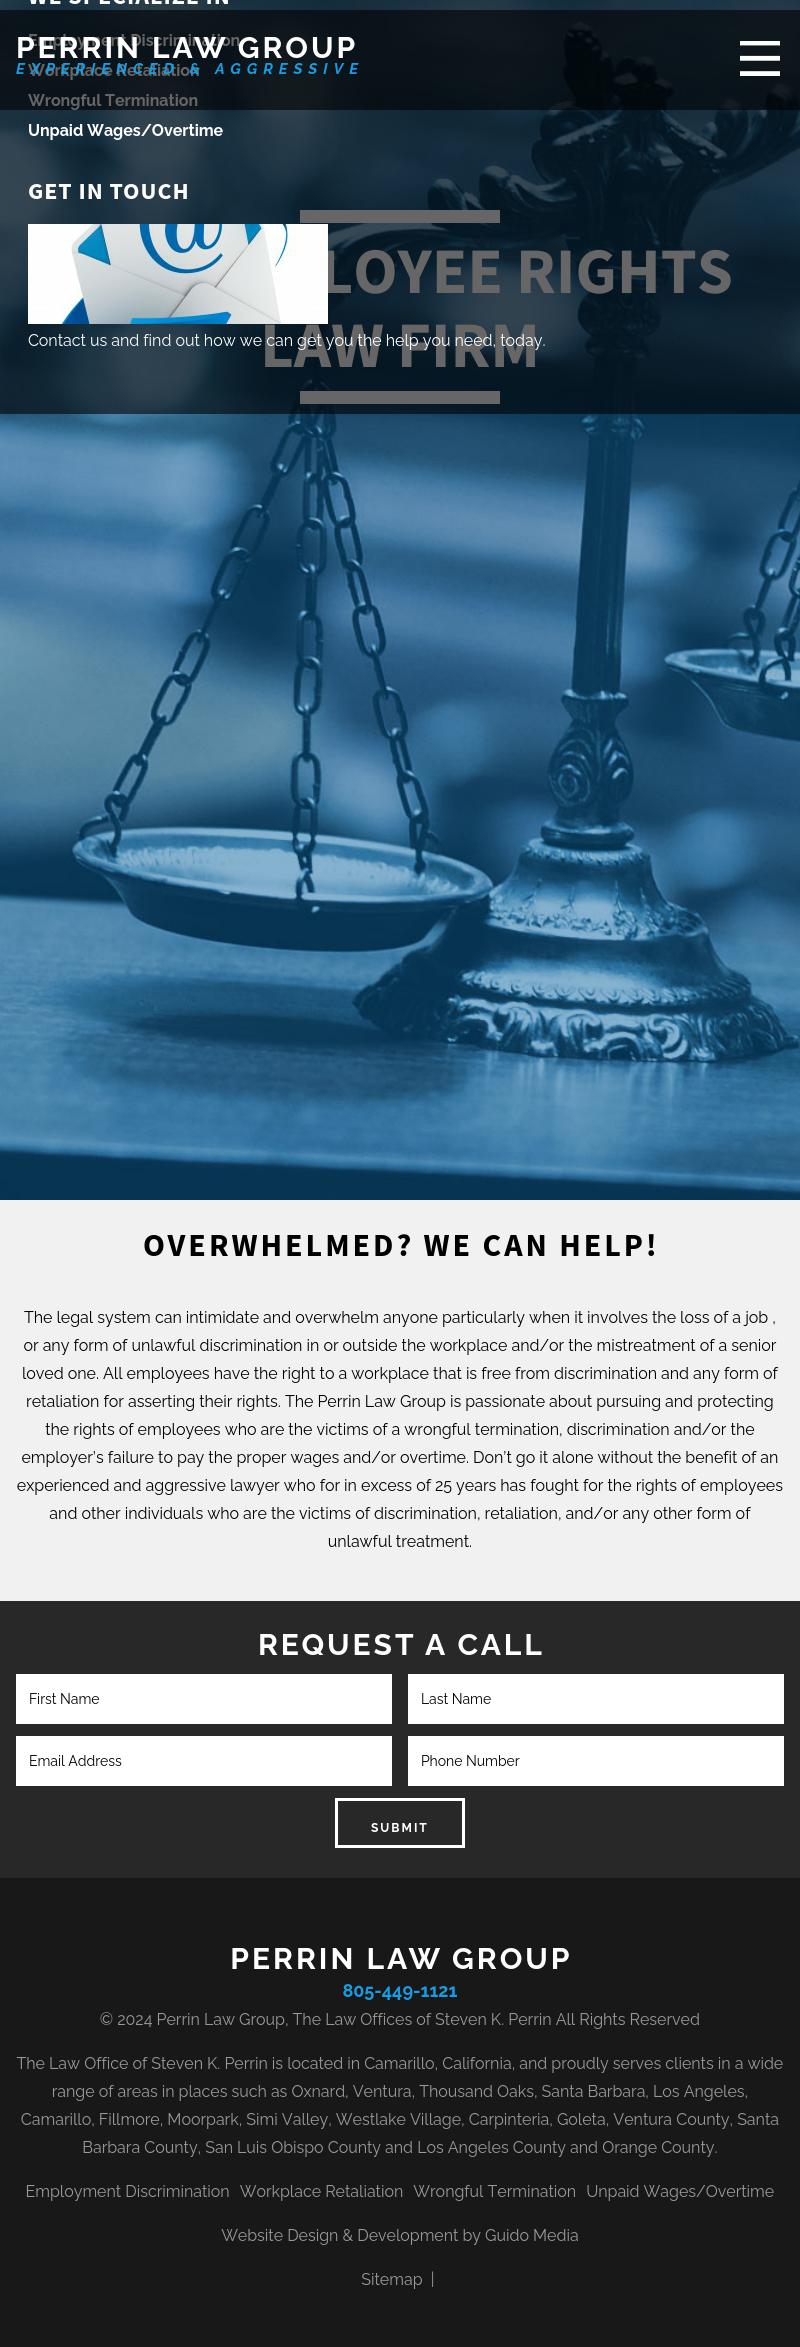 Accident Hotline - Oxnard CA Lawyers